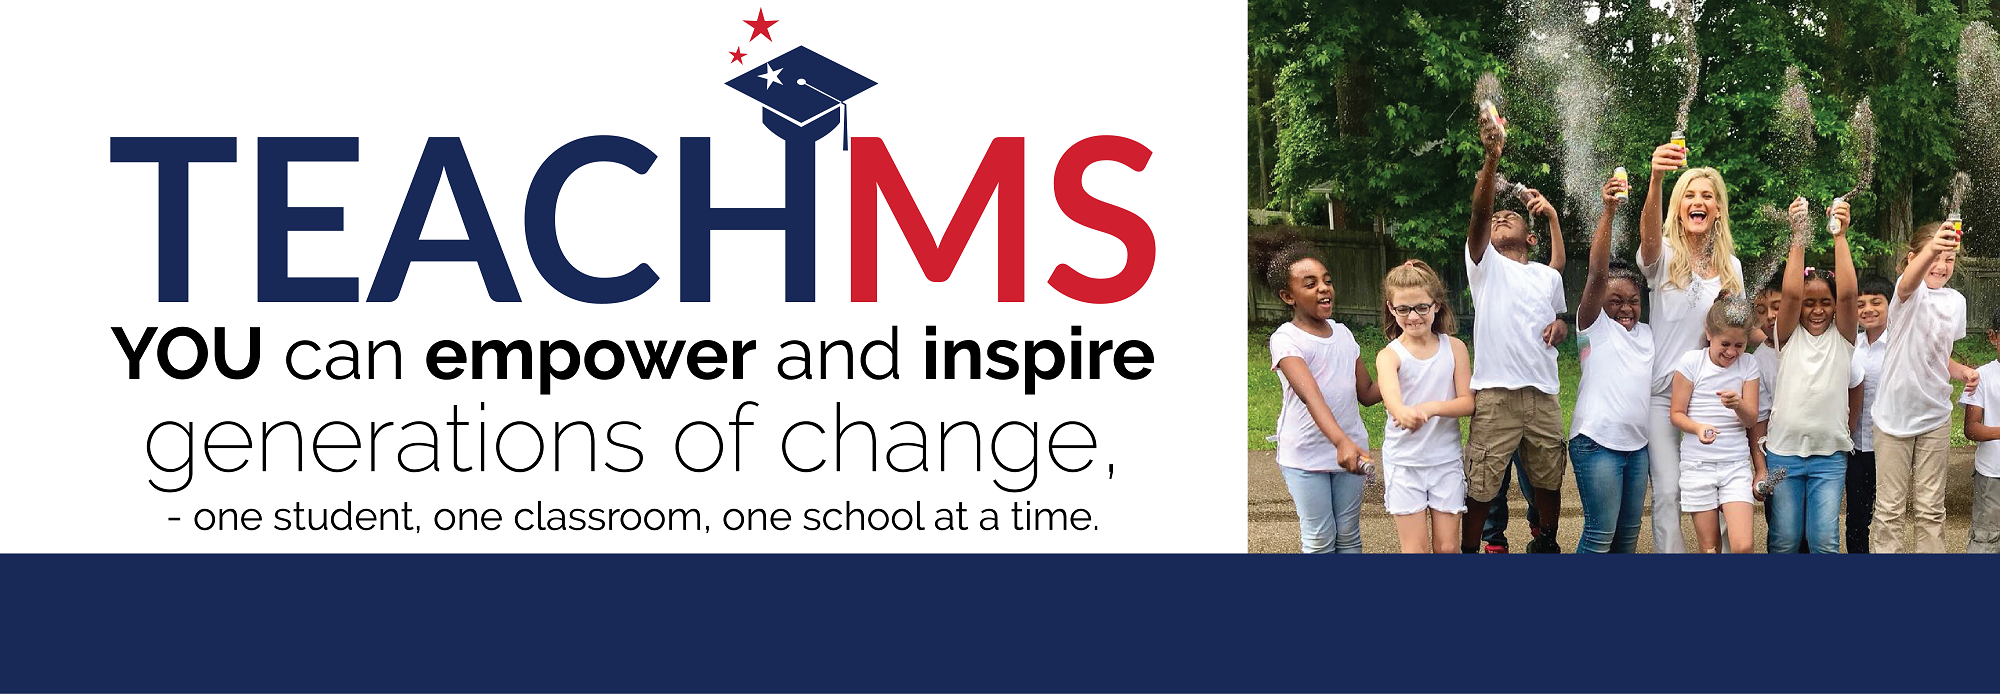 New Teacher Recruitment Campaign: TEACH MS